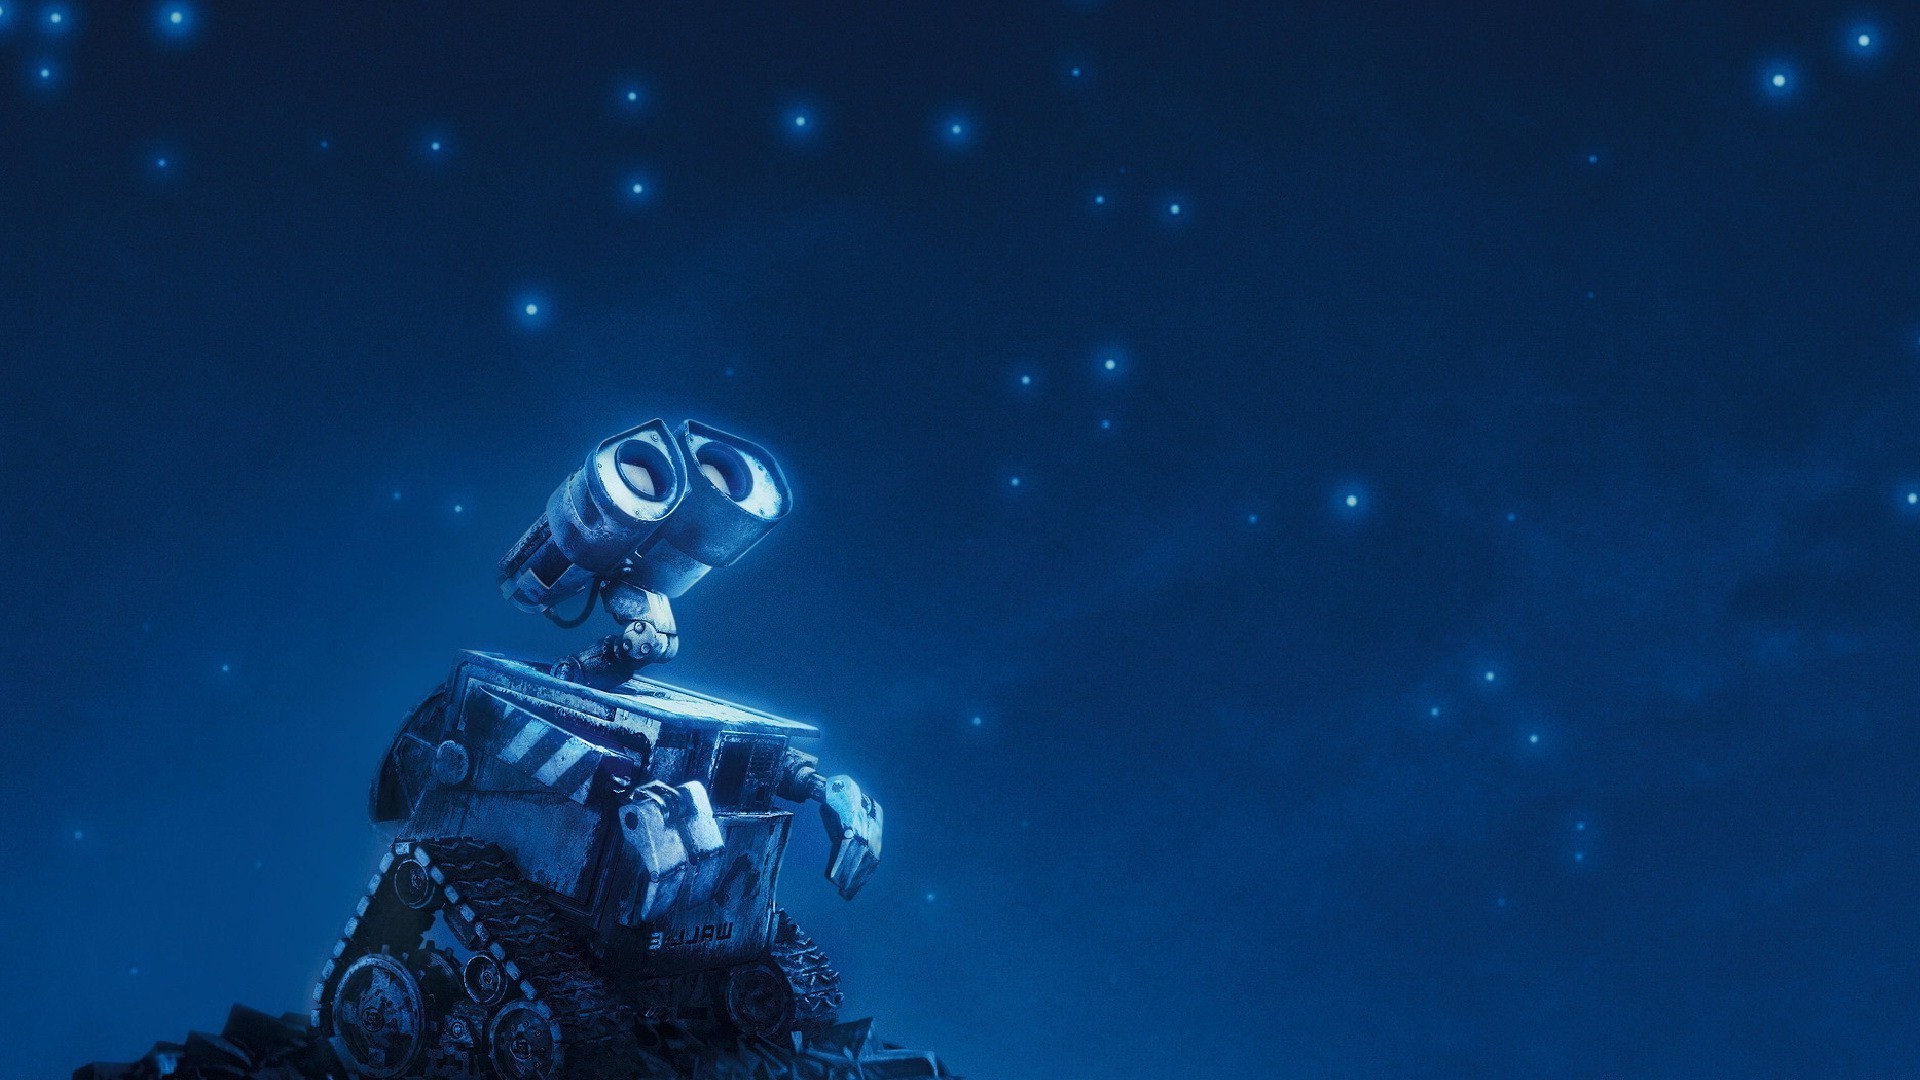 Wall E Pixar Animation Studios Robot Movies Stars